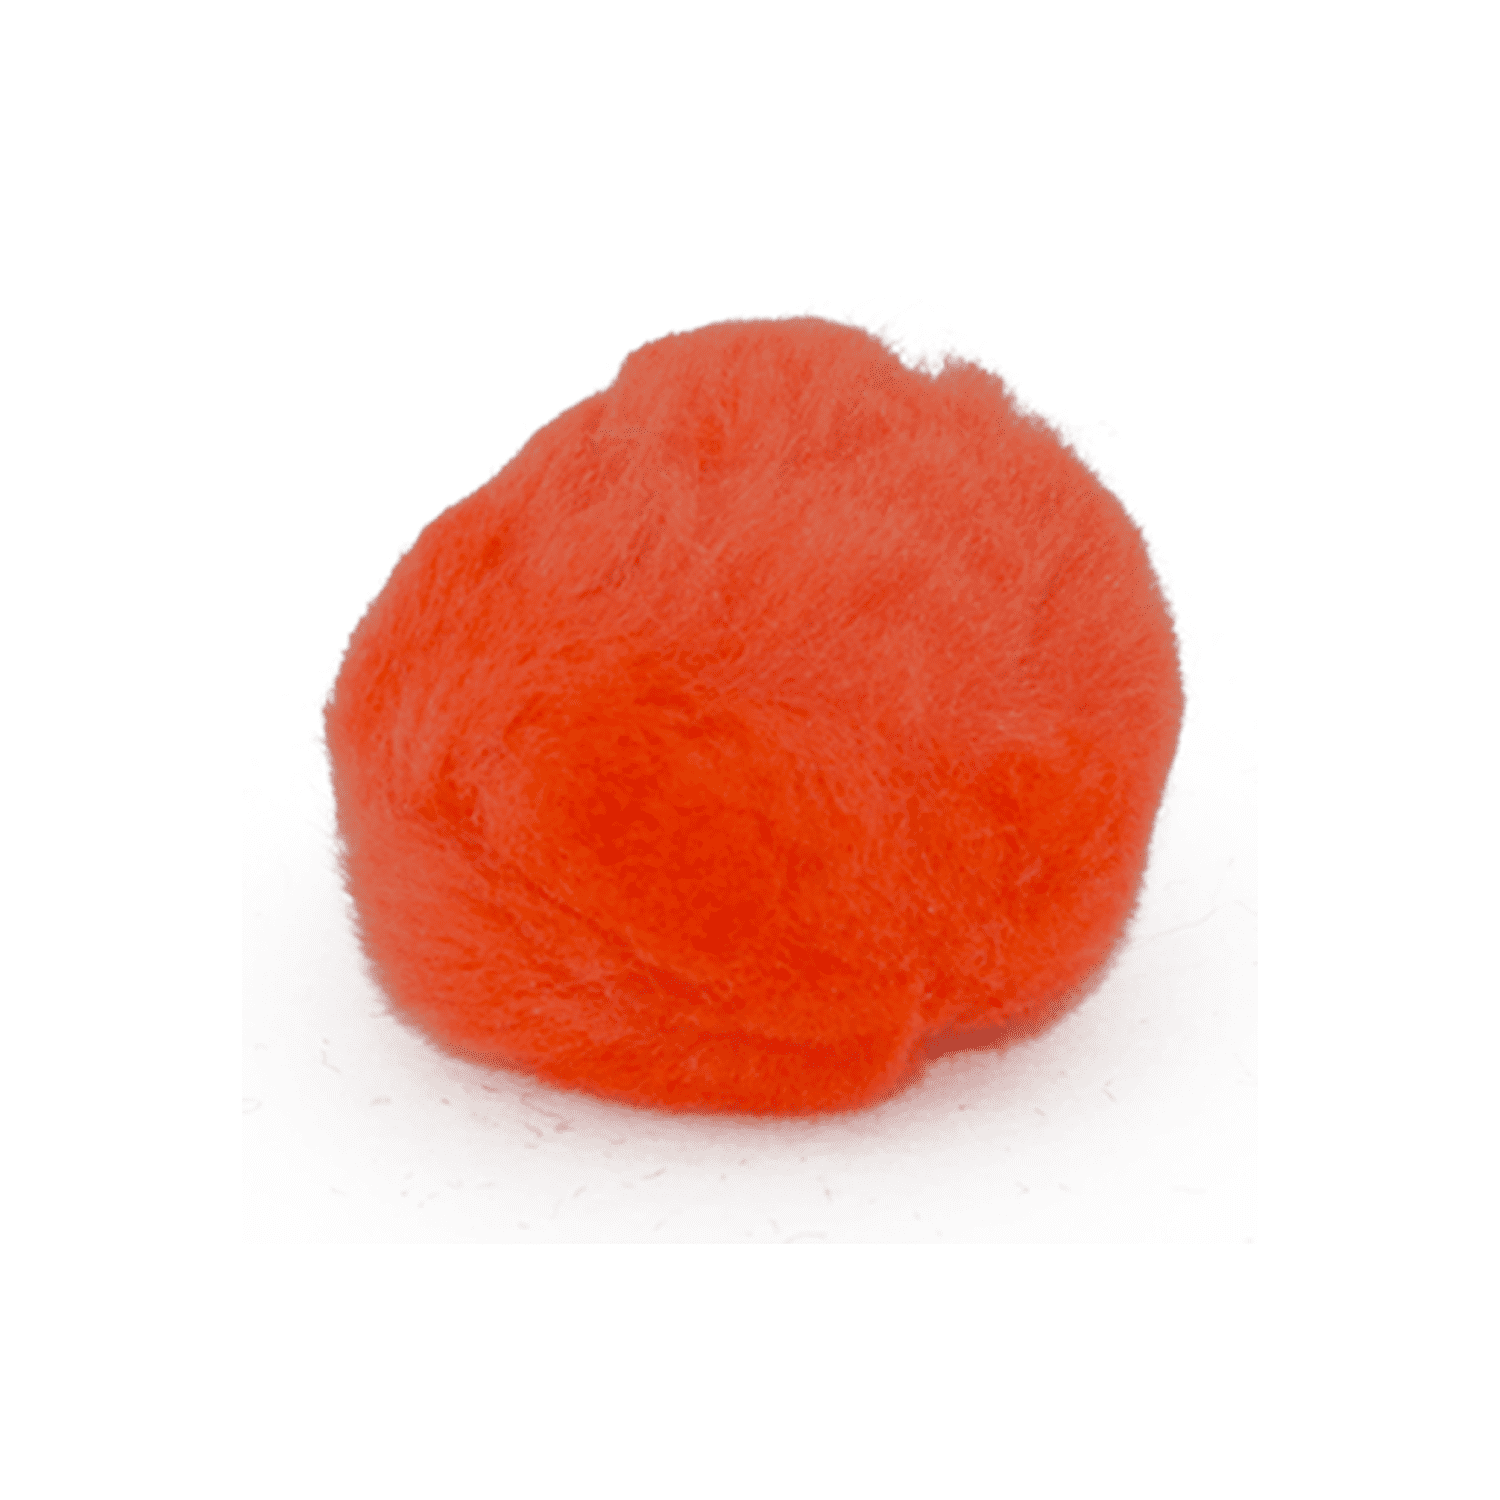 Iooleem Large Pom Poms, 1.5 inch(4cm), 90pcs Red Pom Poms, Large Size, Pom  Poms for Arts and Crafts, Pom Pom Balls, Craft Supplies.